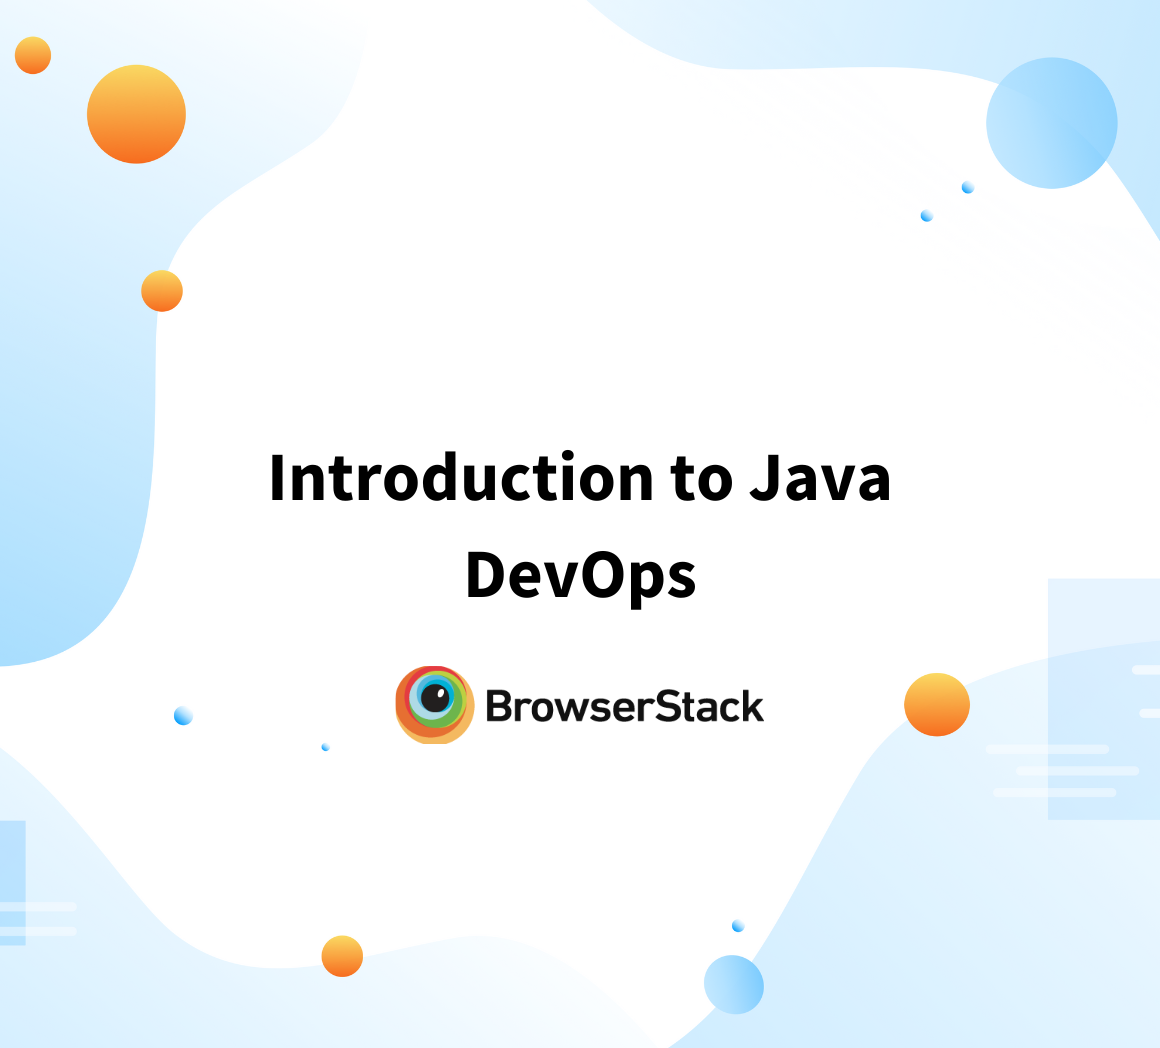 Introduction to Java DevOps